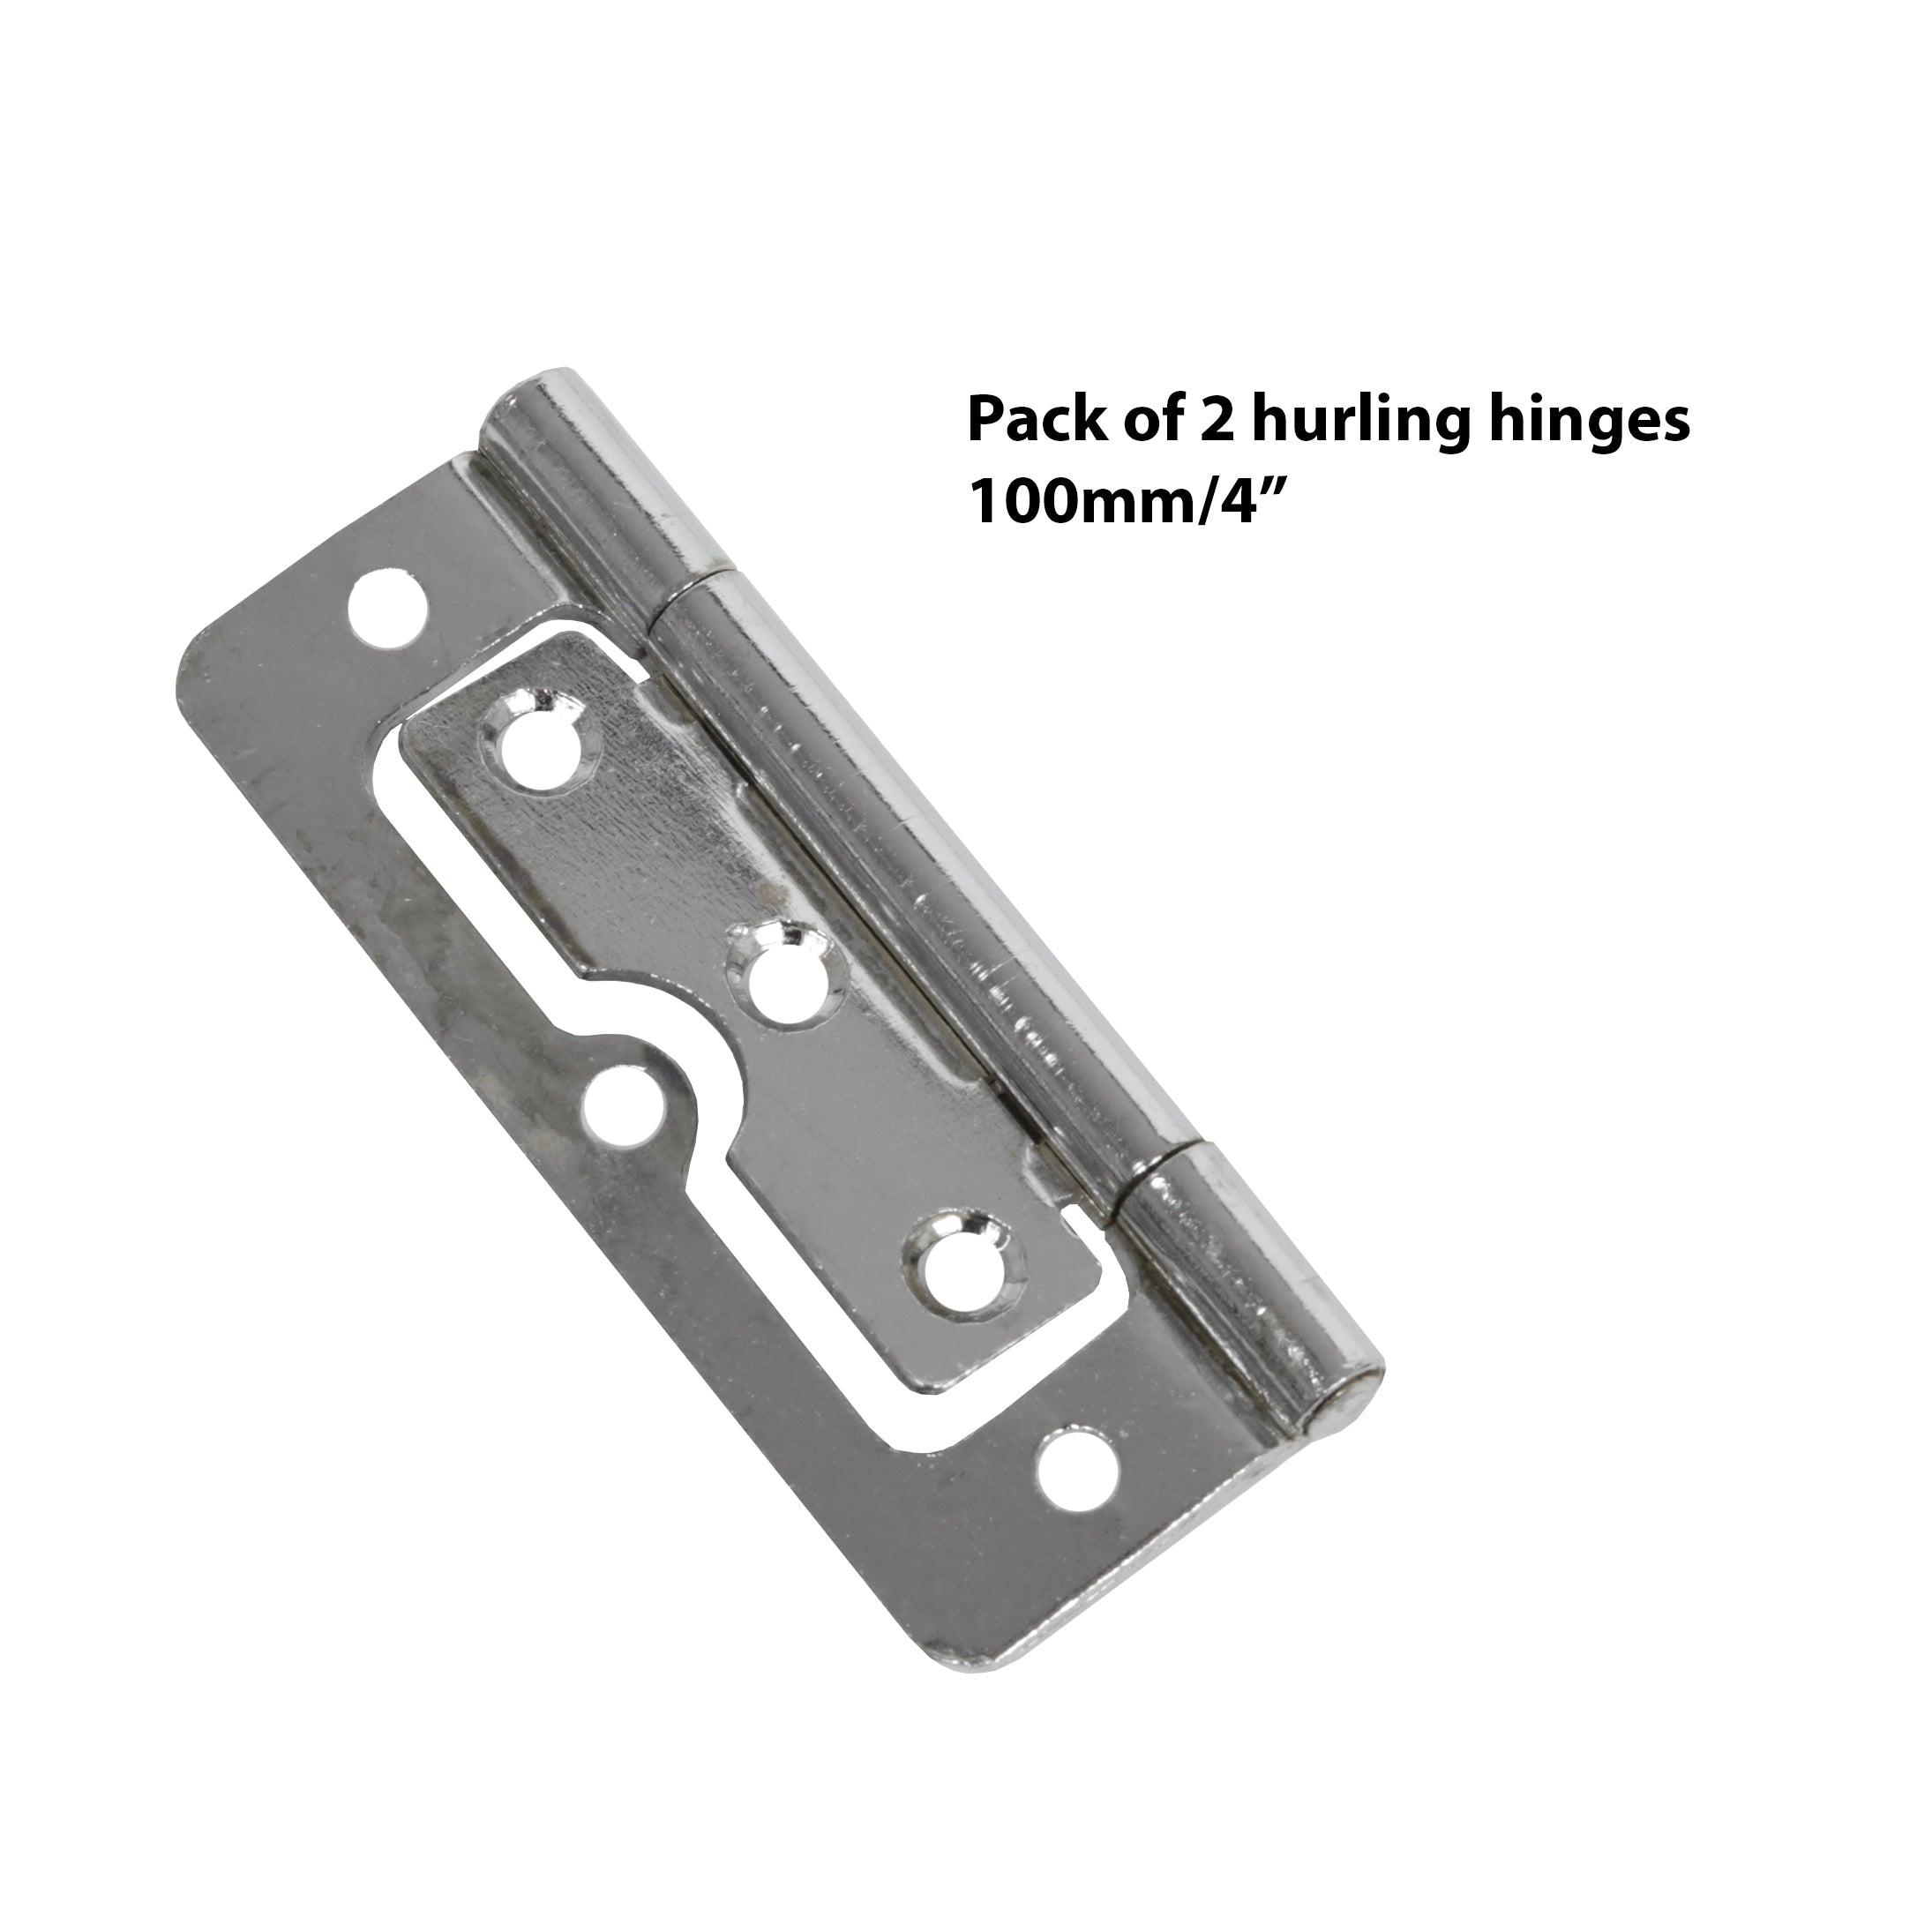 Hurling Hinge Polished Chrome - Fixed Pin 100mm (4")